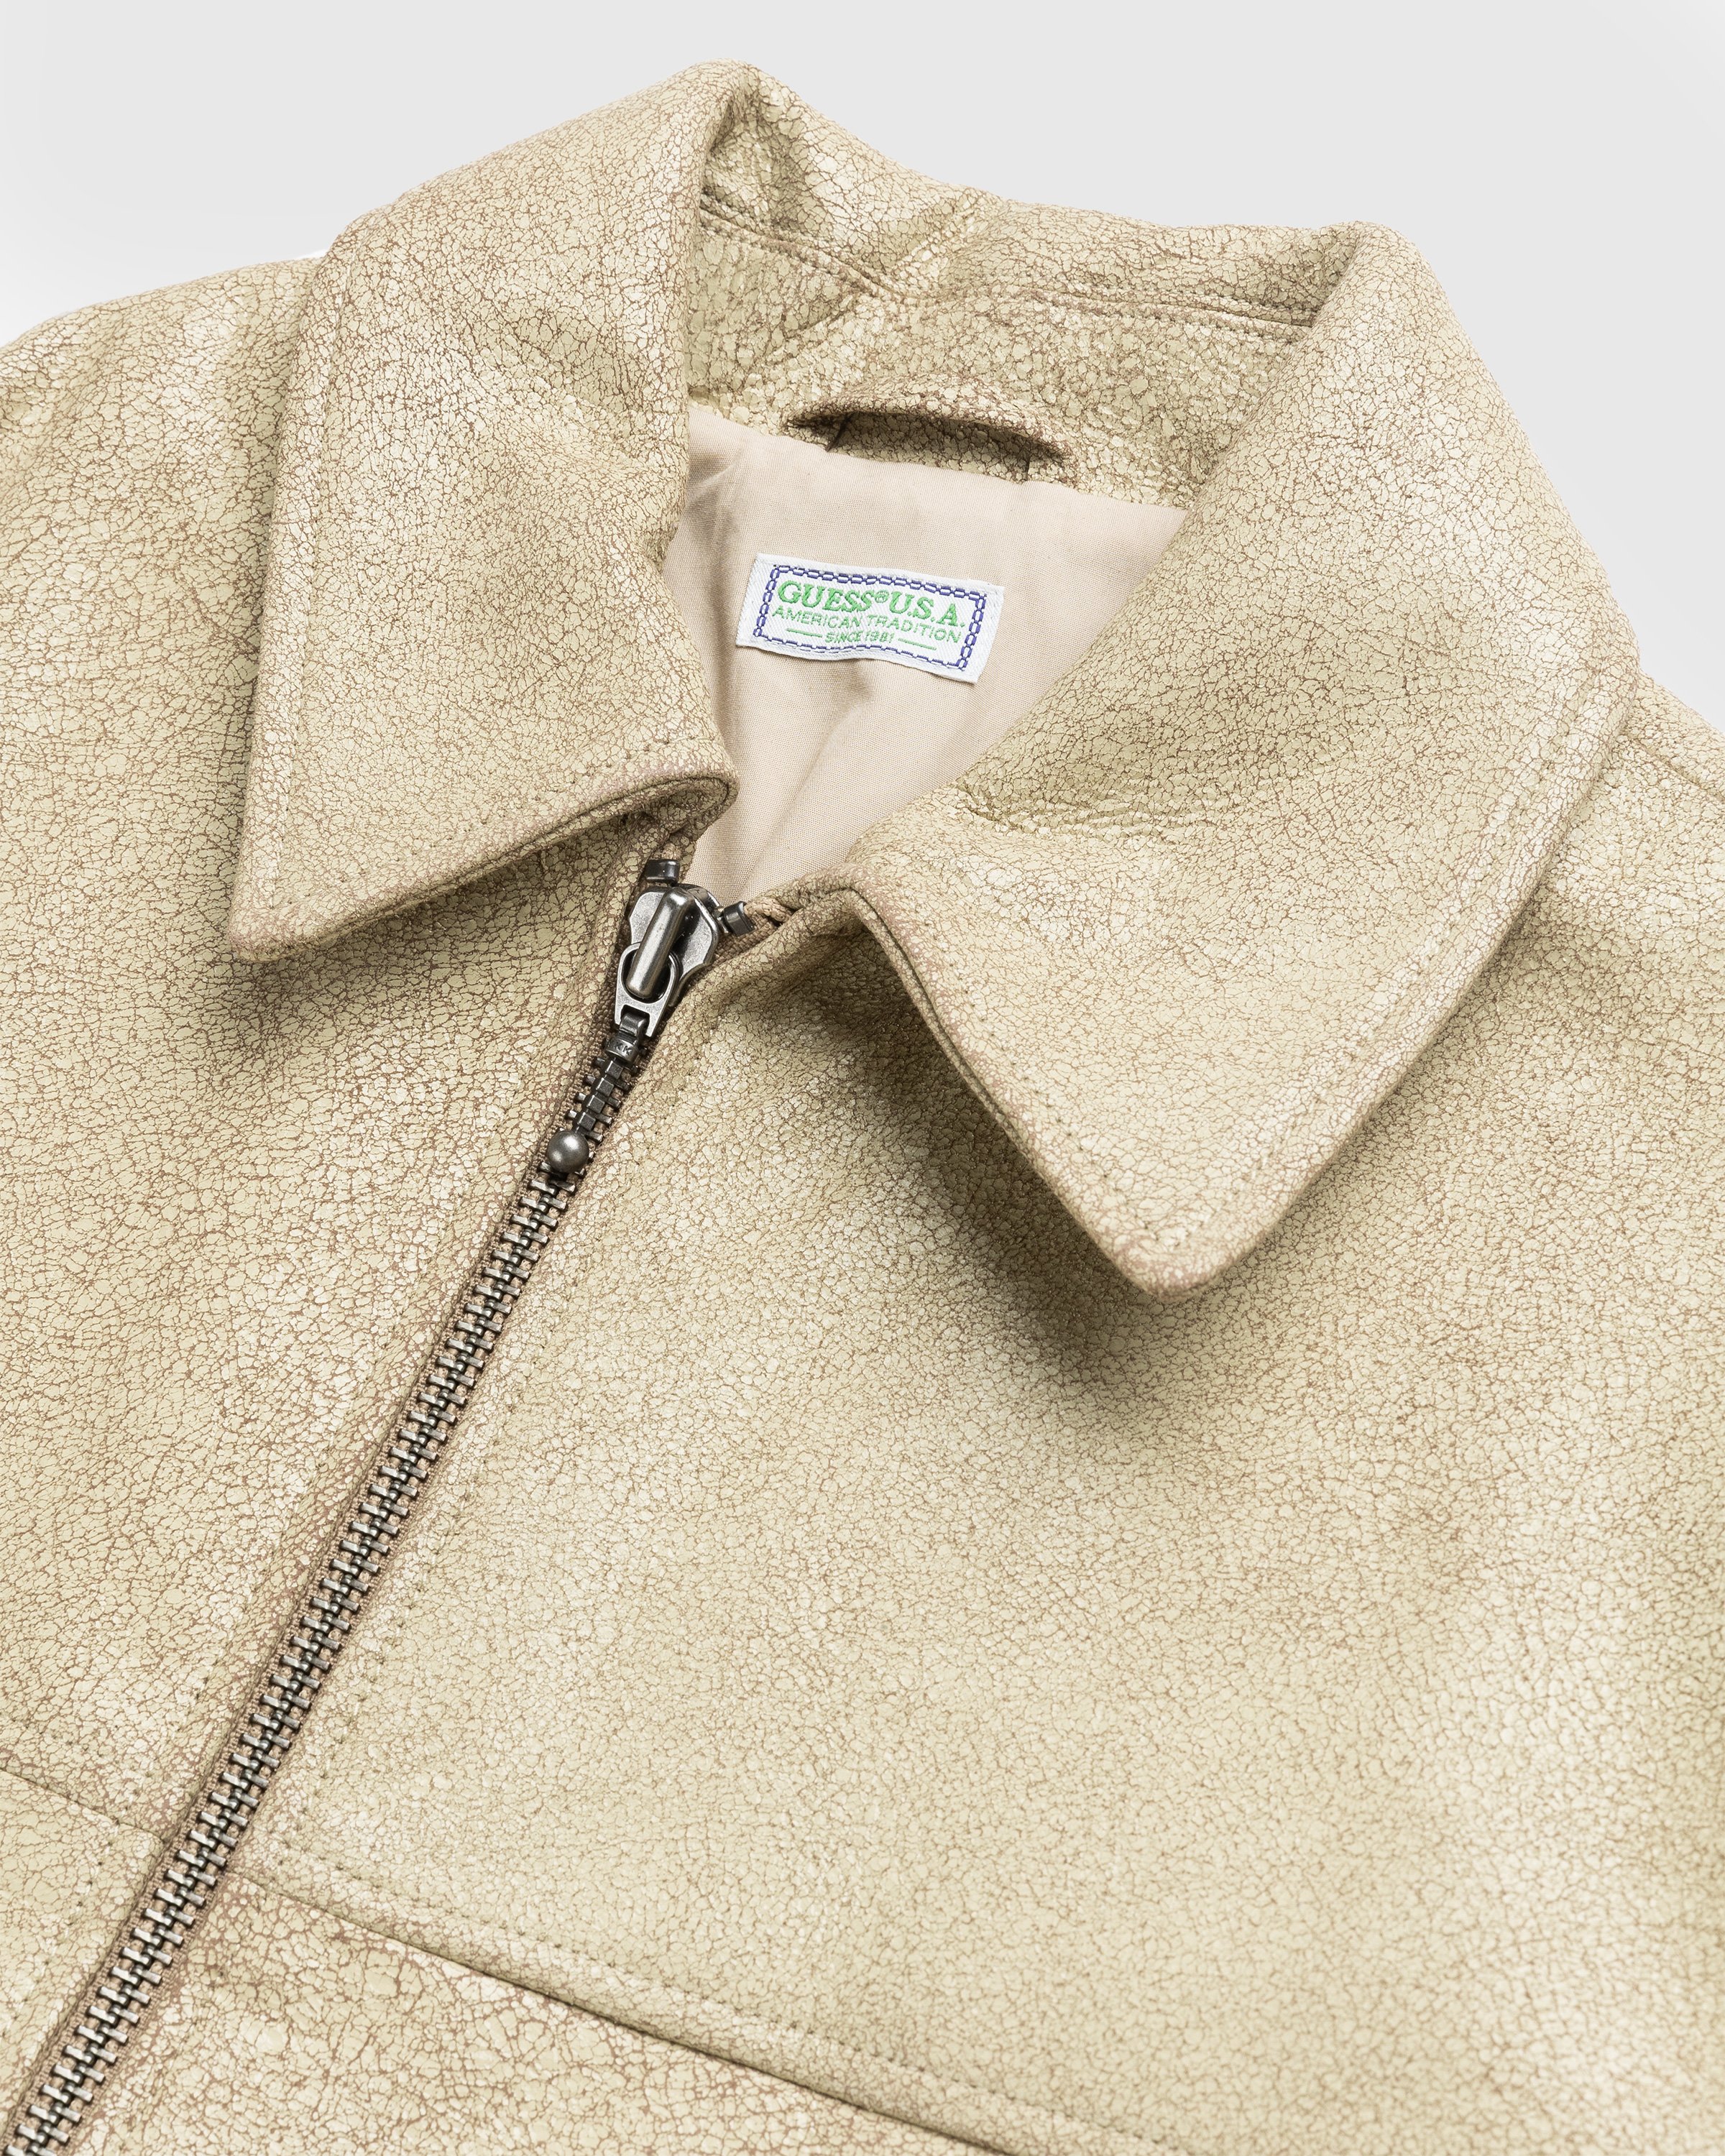 Guess USA - Crackle Leather Jacket Beige - Clothing - Beige - Image 6